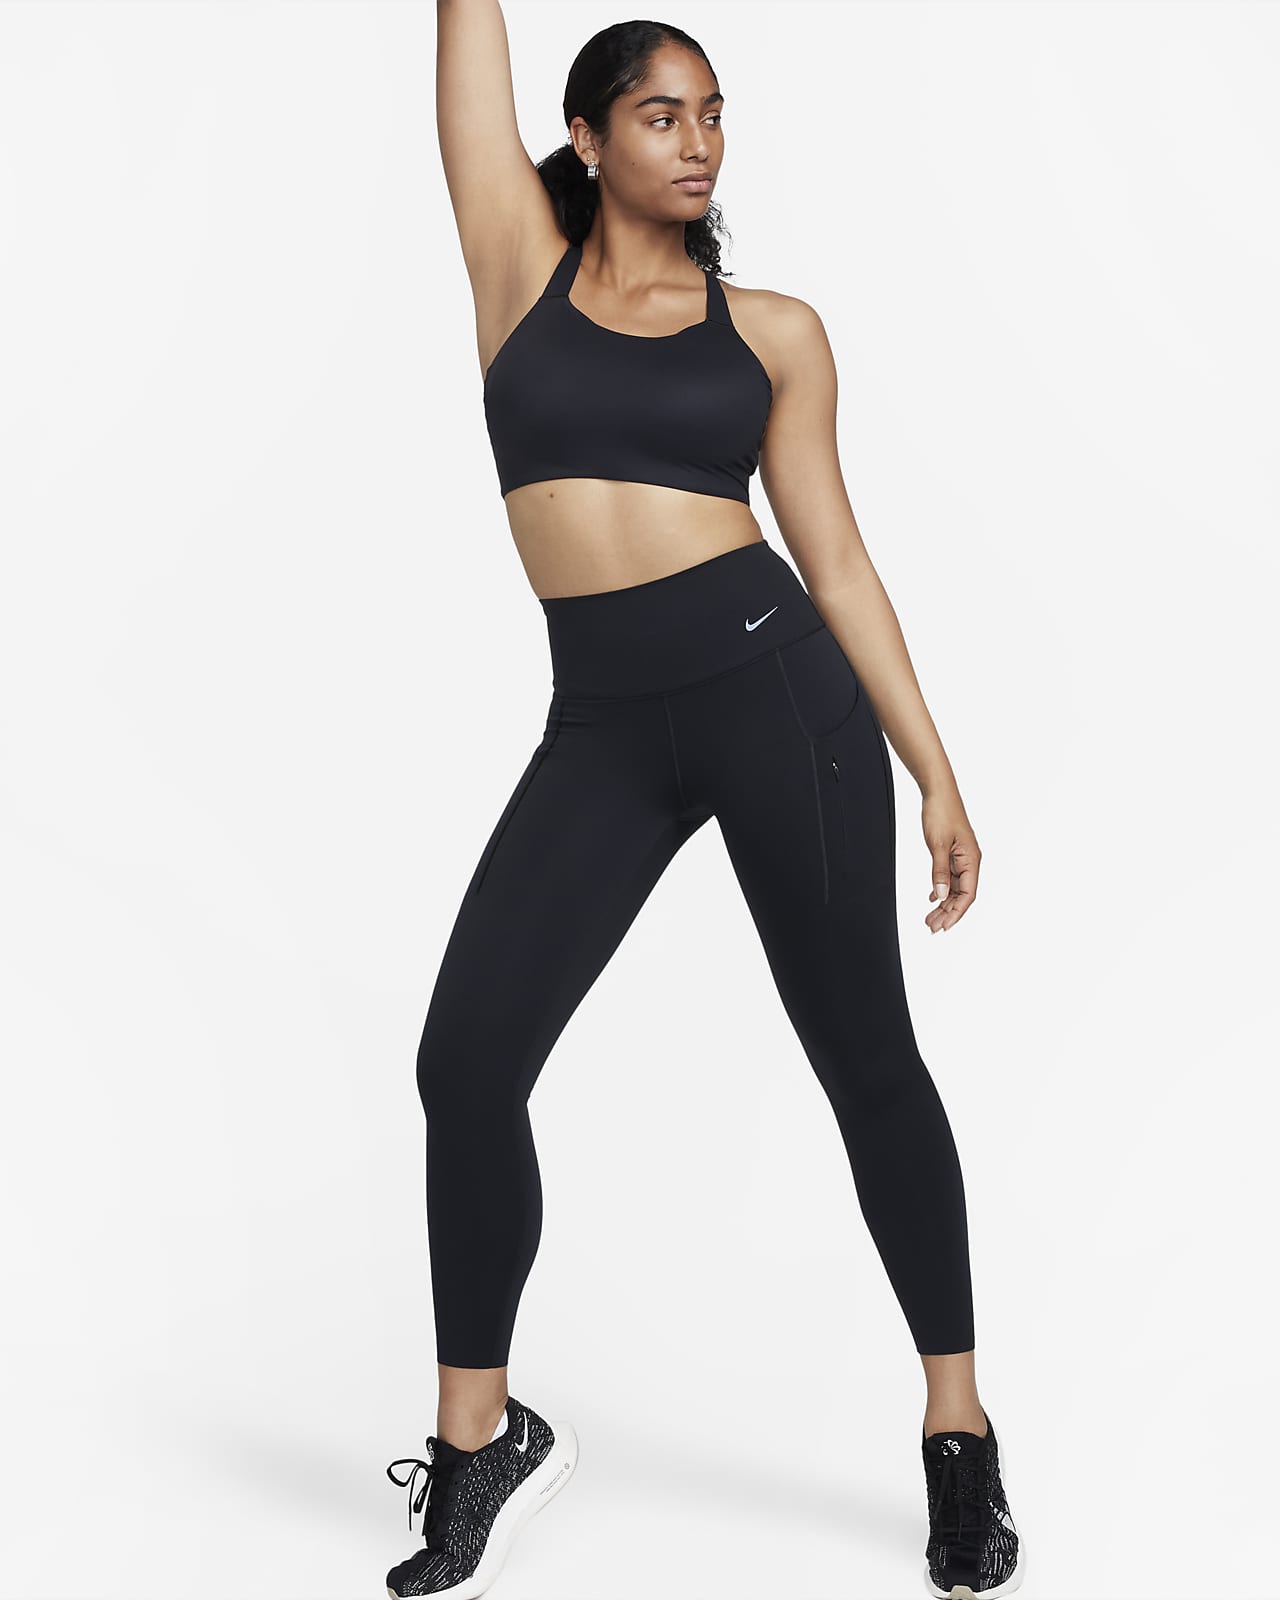 Legging 7/8 taille haute avec poches Therma-FIT Nike Go pour femme